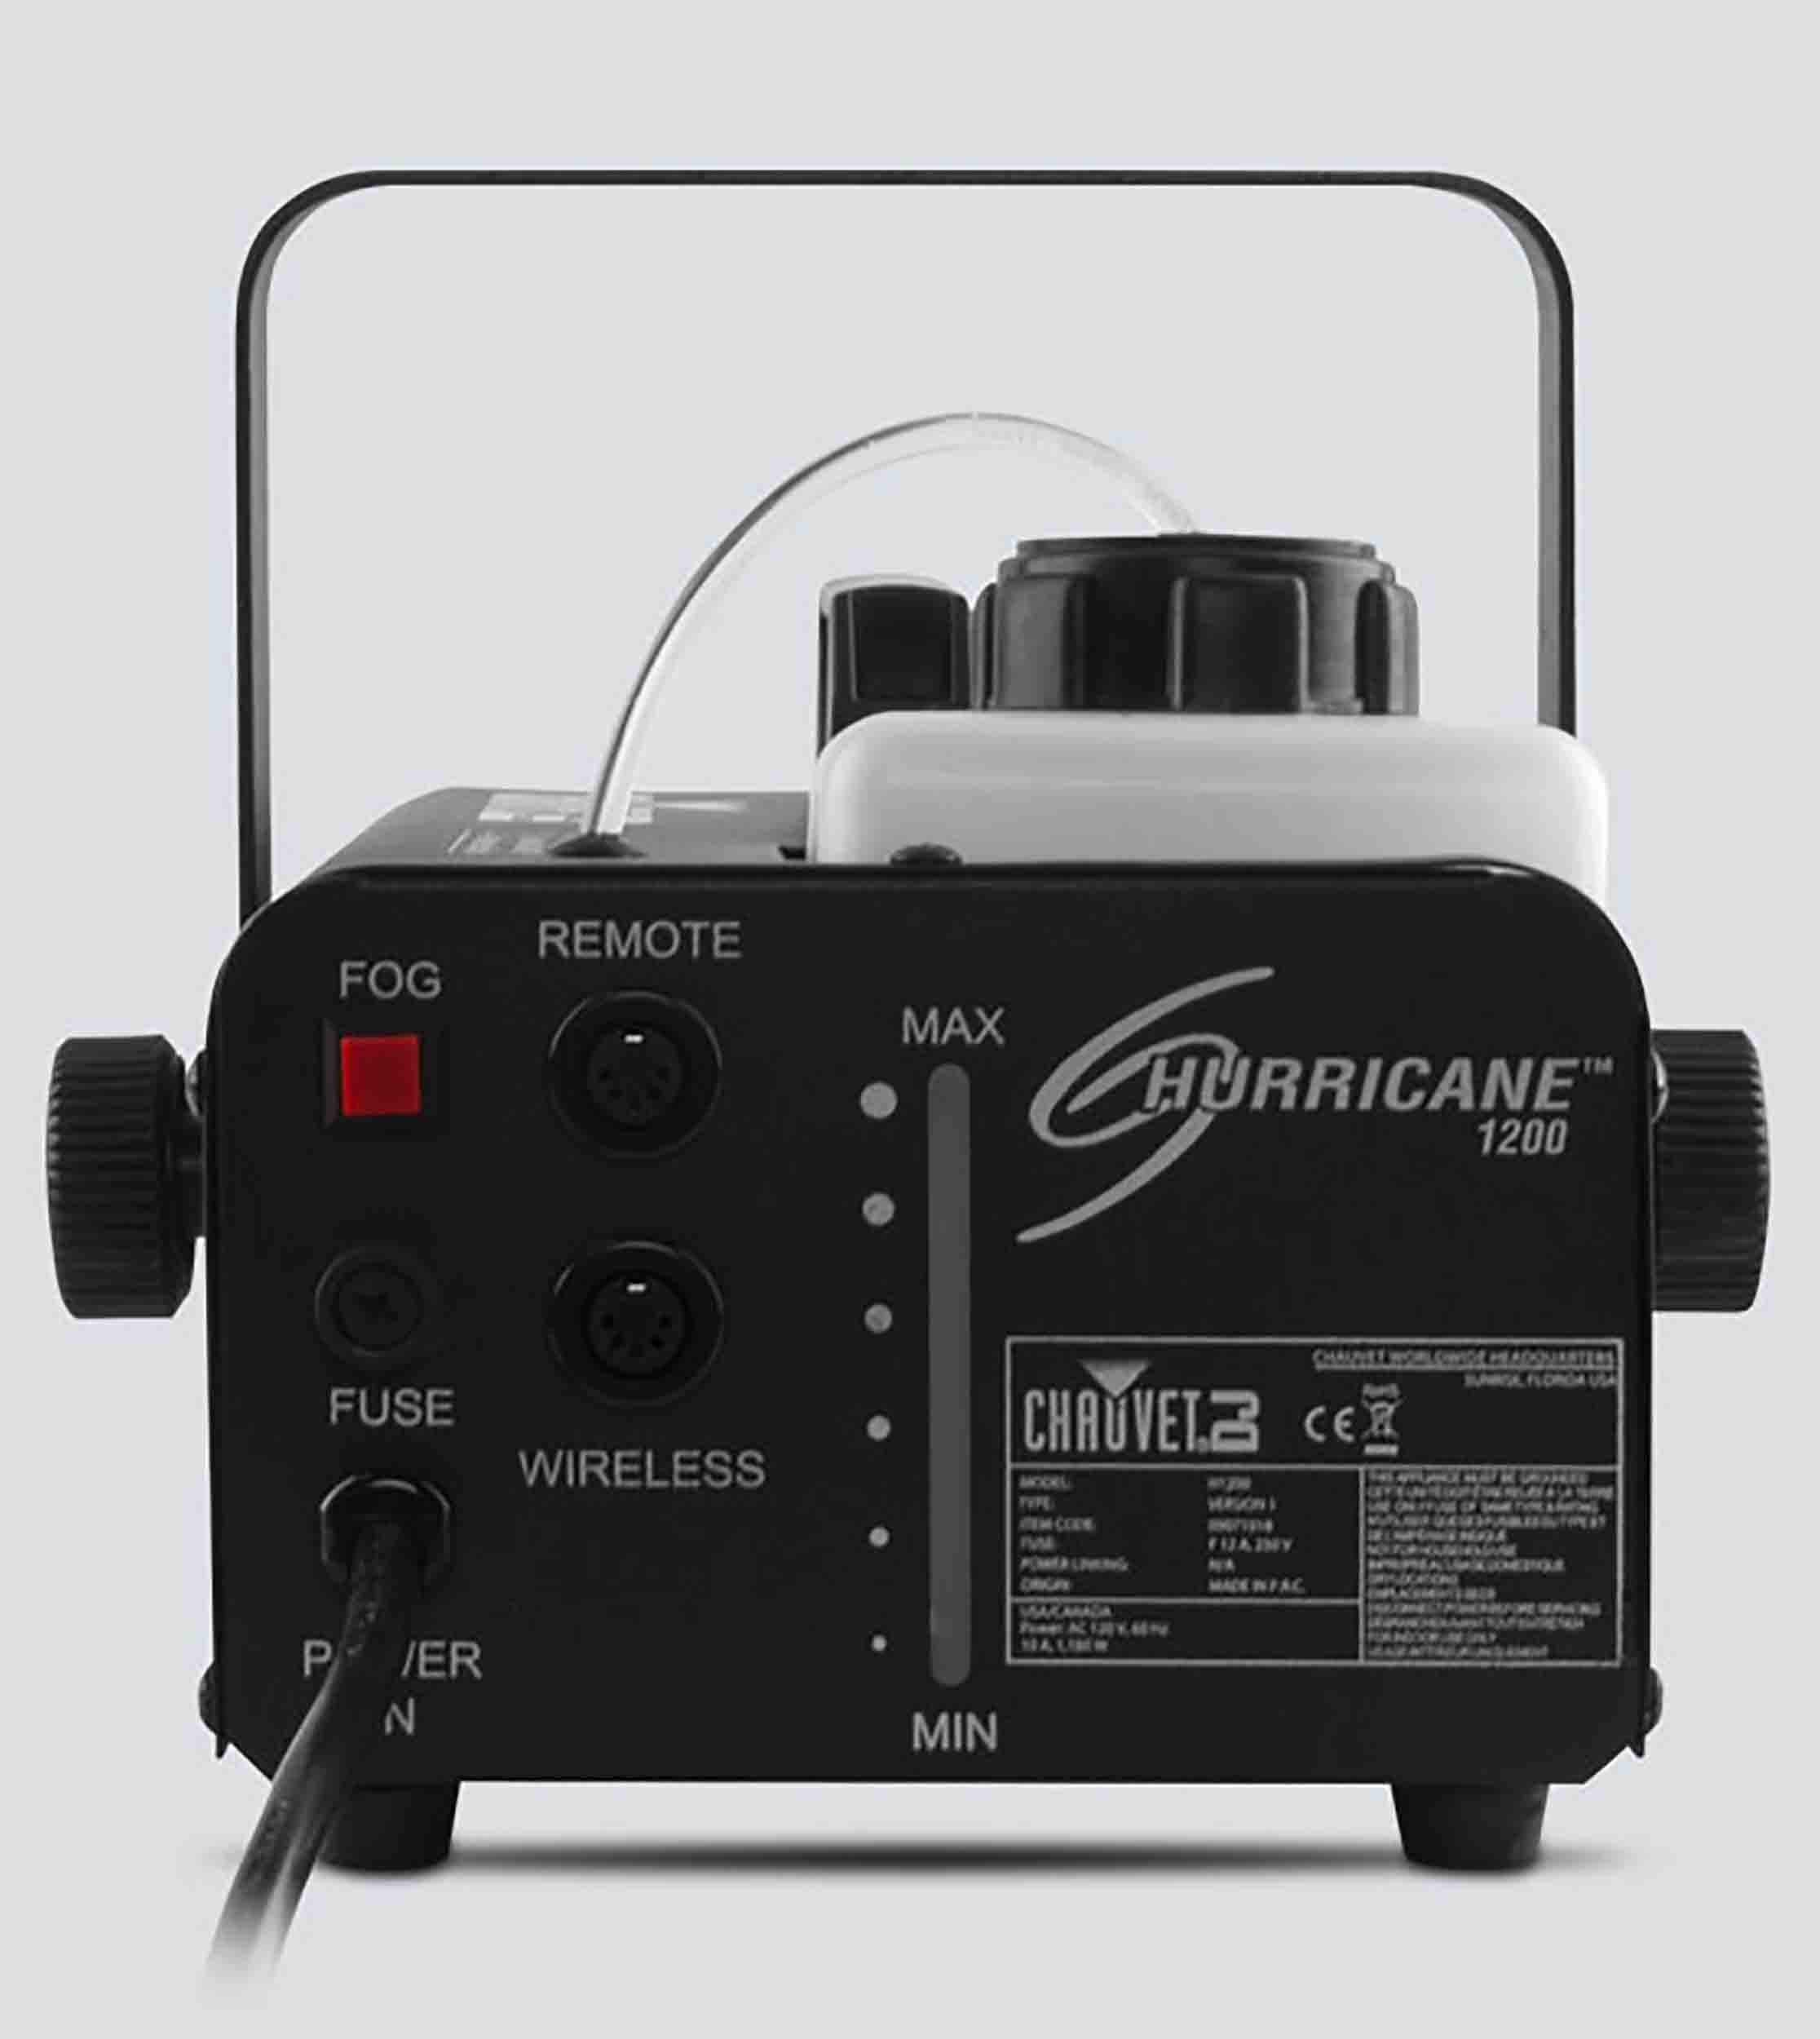 Chauvet Dj H1200 Hurricane 1200 Powerful and Portable Fog Machine - Hollywood DJ